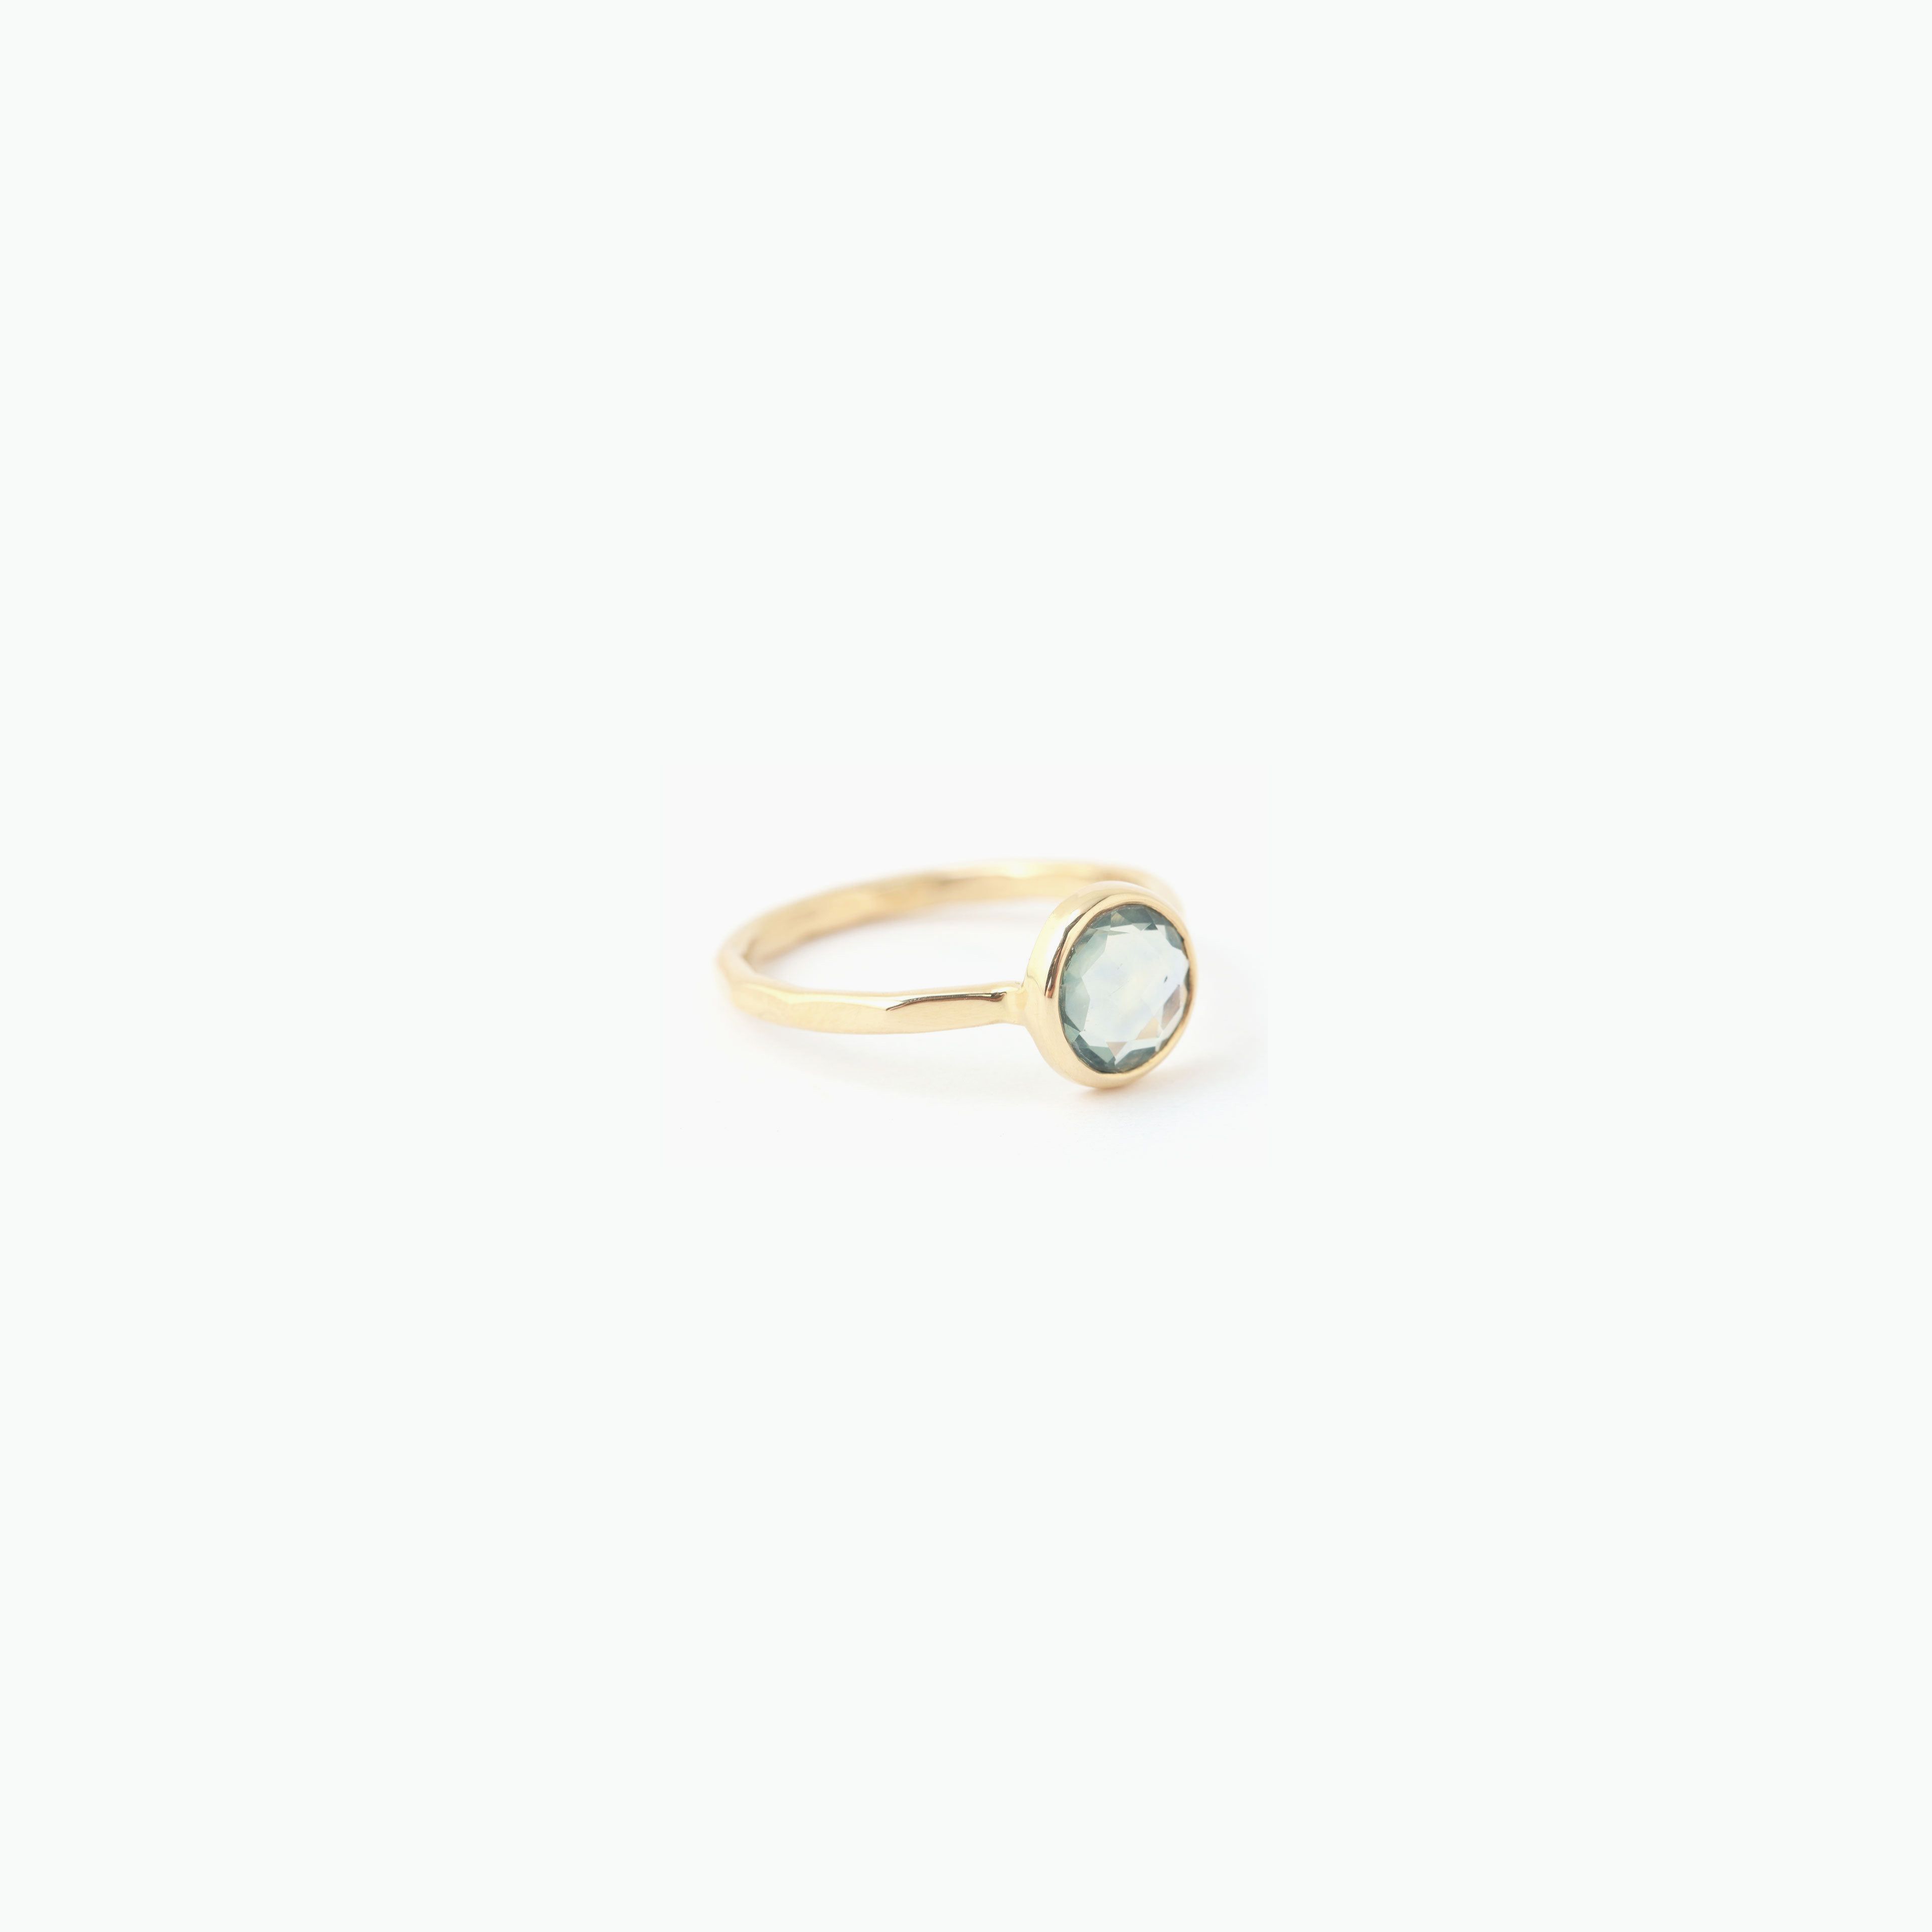 Round Blue Sapphire ring